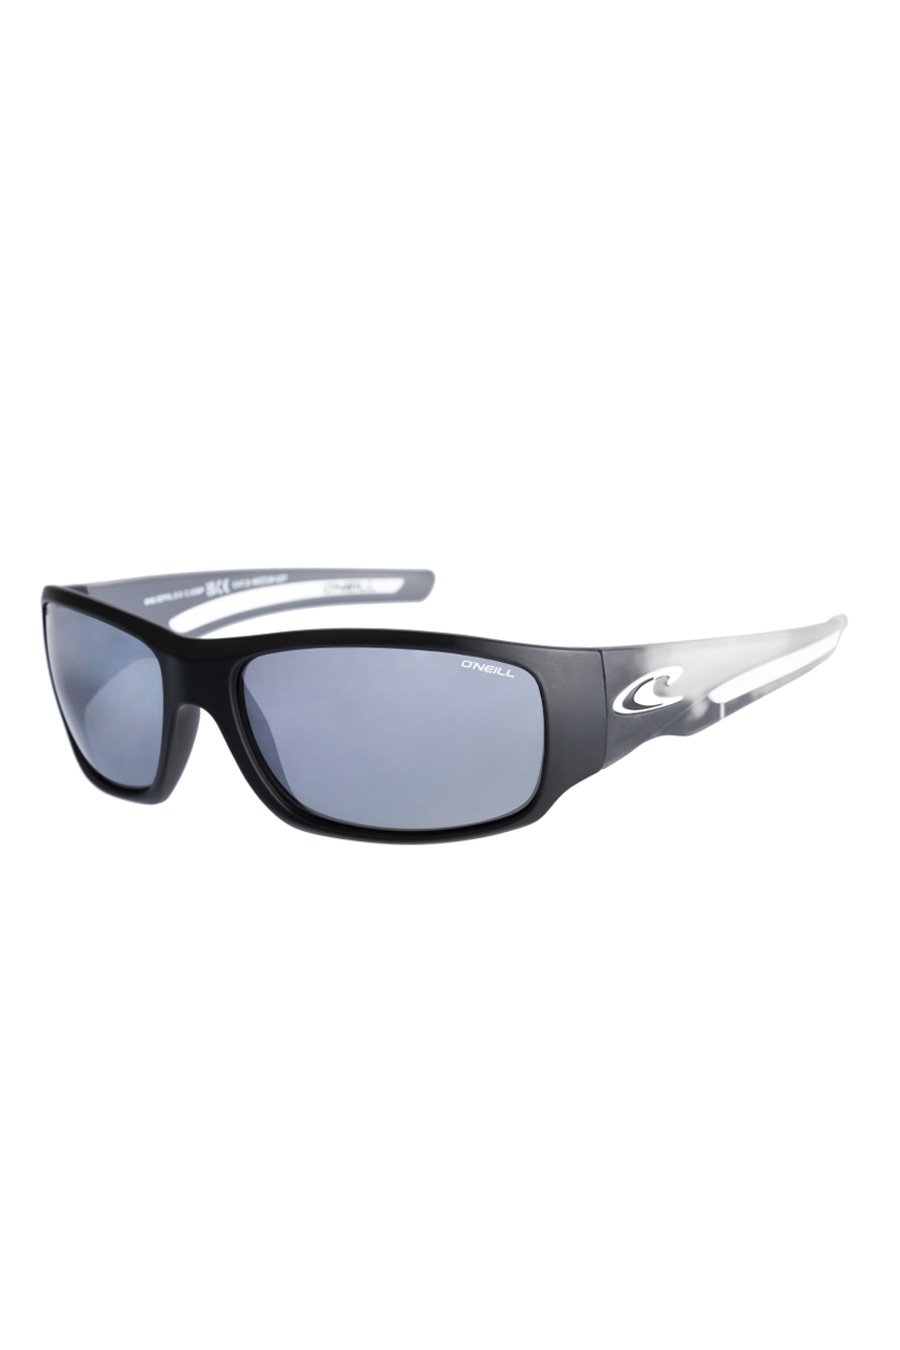 Sunglasses ONEILL ONS-ZEPOL20-108P